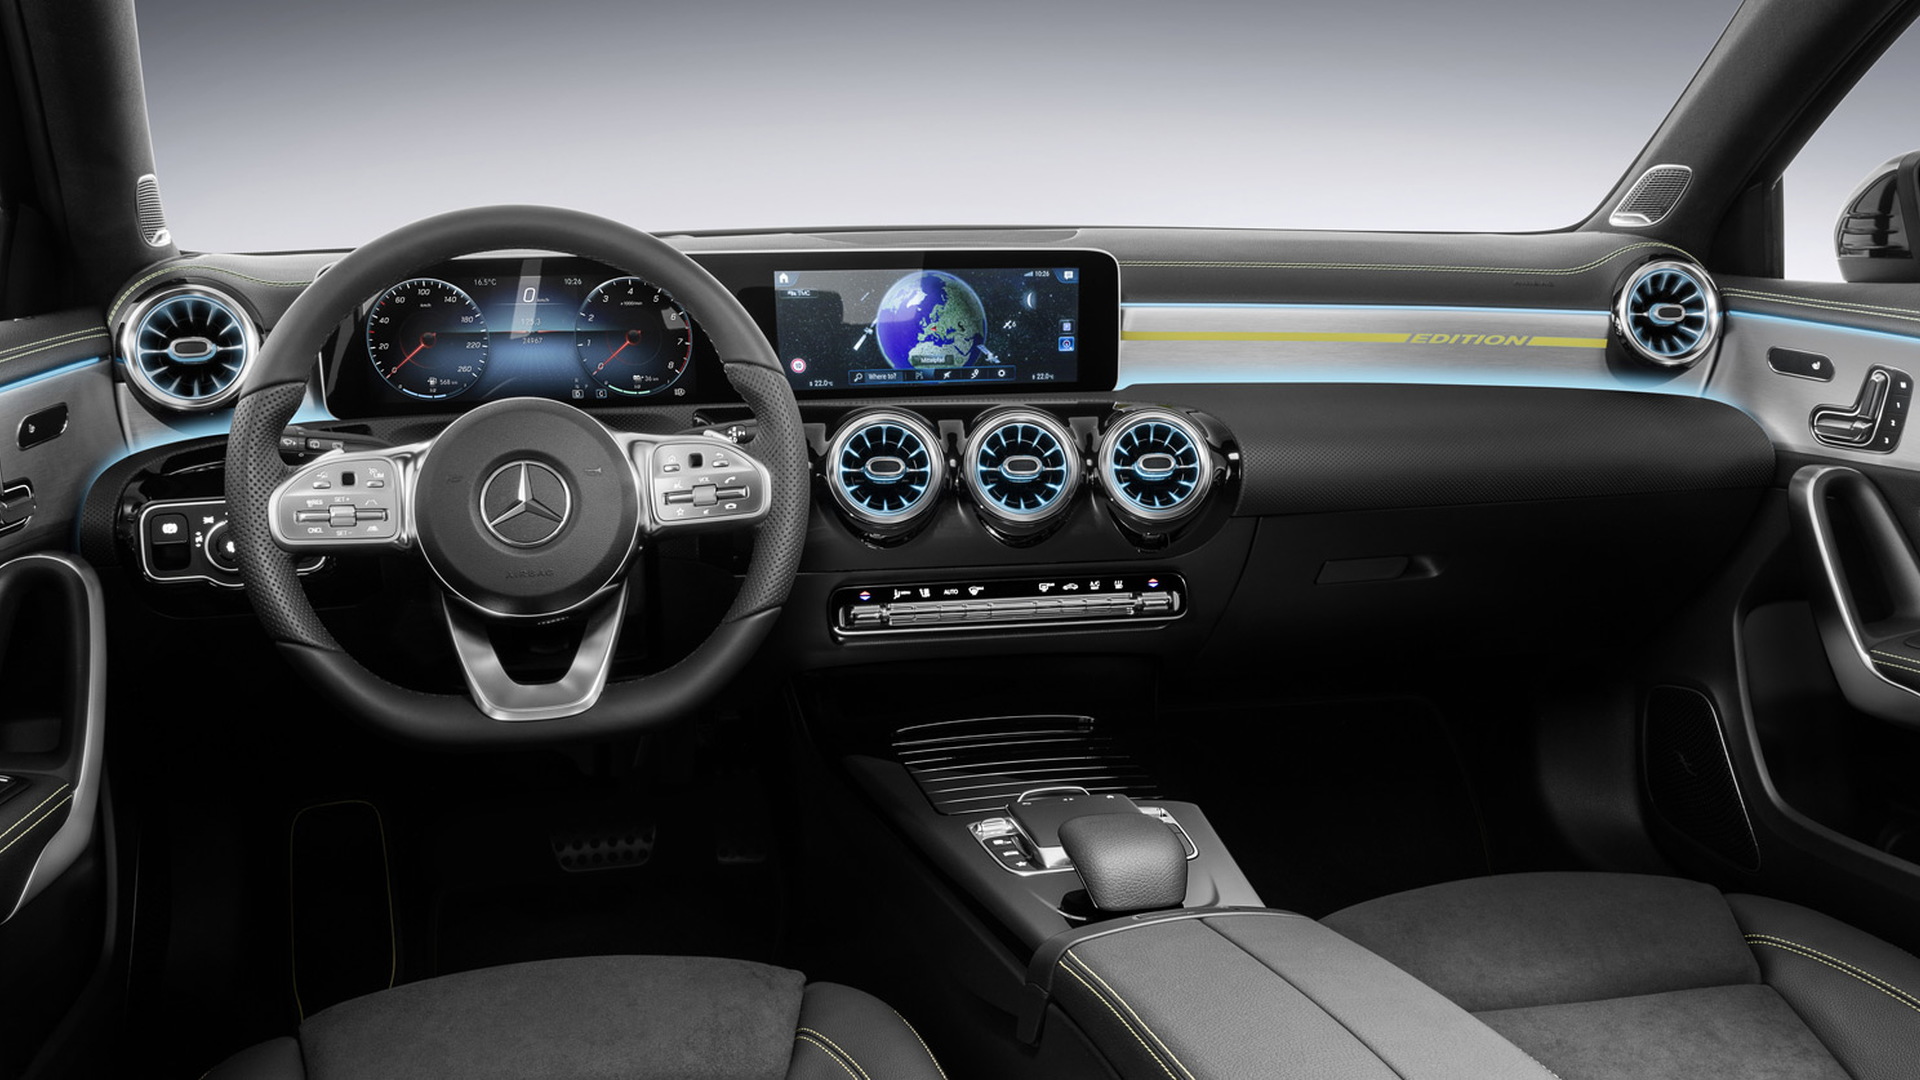 Interior design of next-generation Mercedes-Benz compact cars